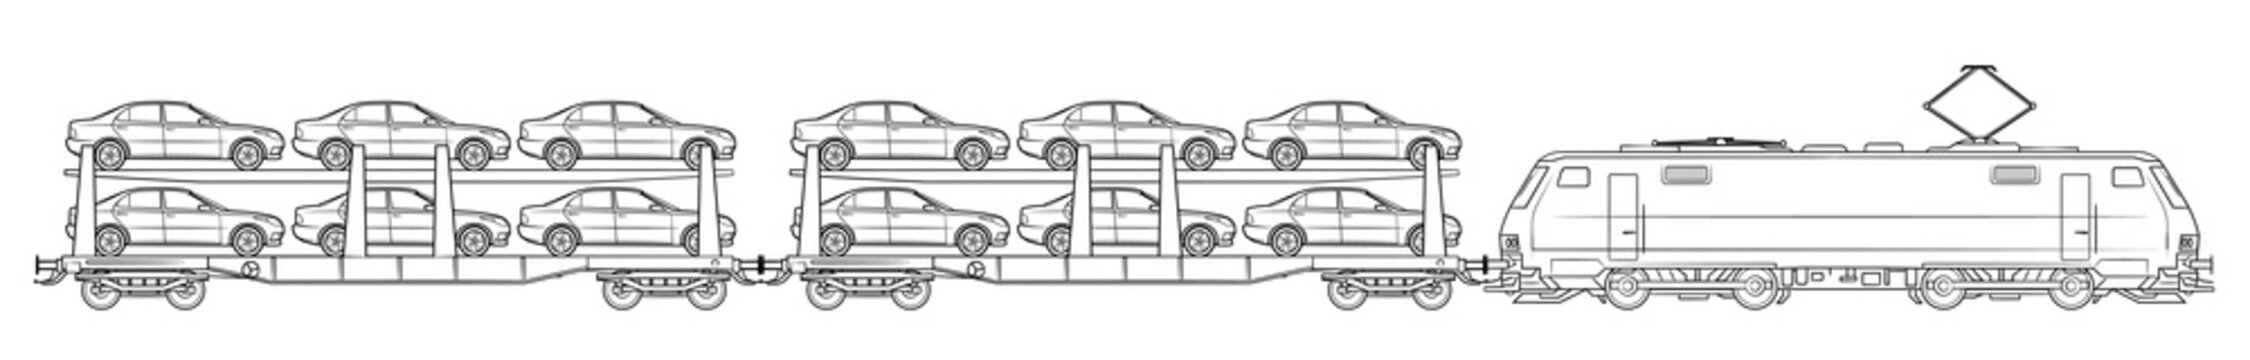 Cars carrier train illustration - black and white vector stock illustration